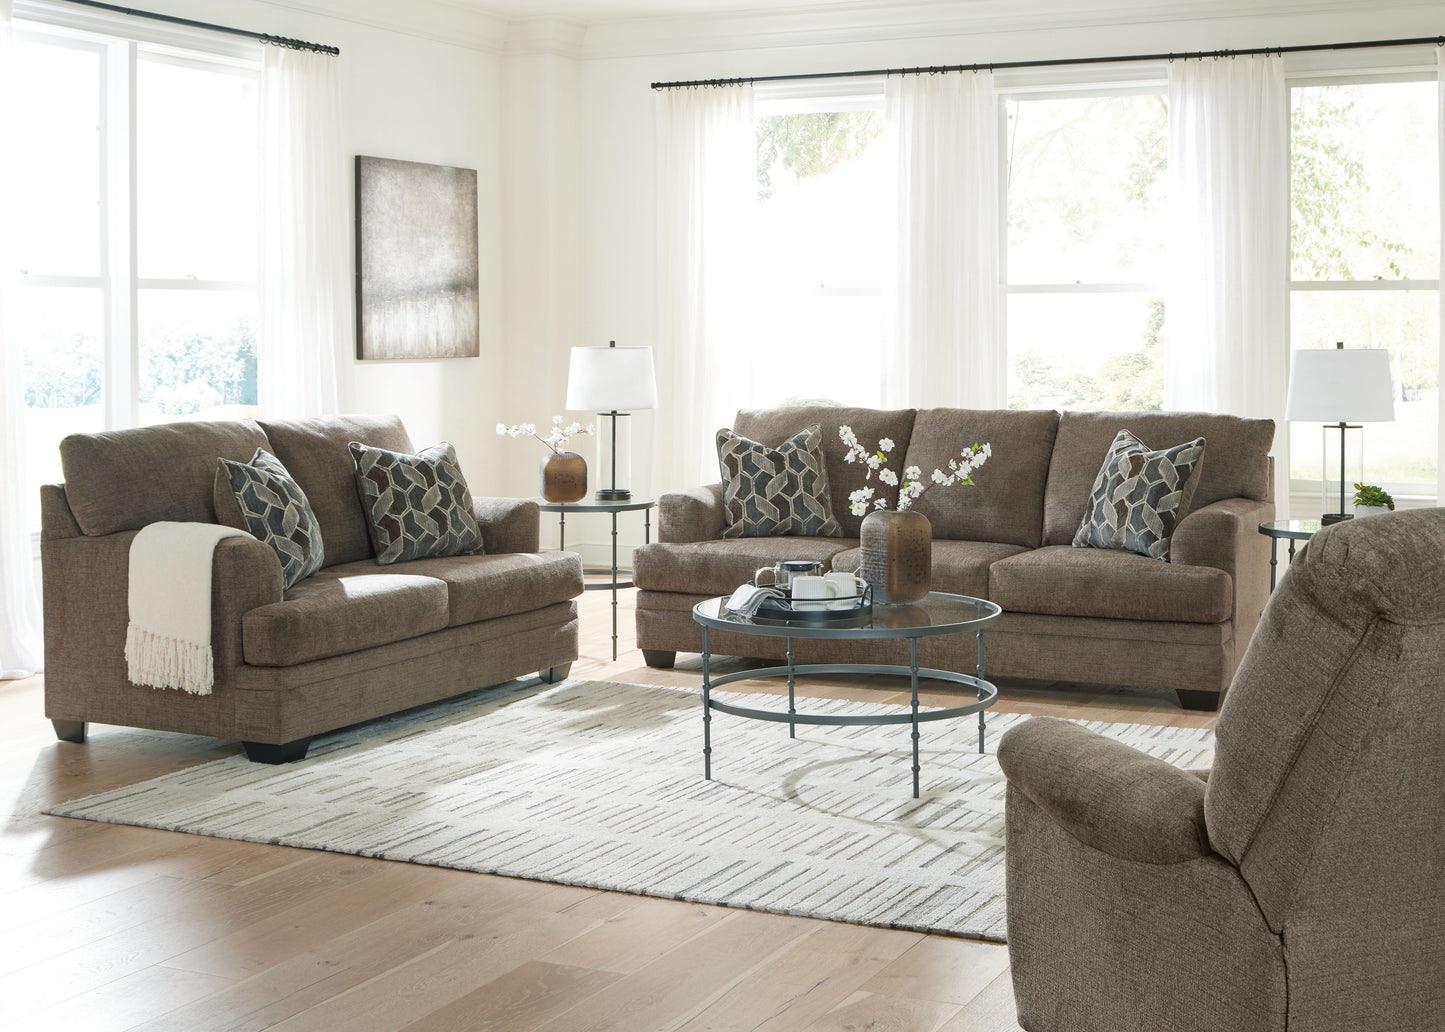 Stonemeade - Living Room Set